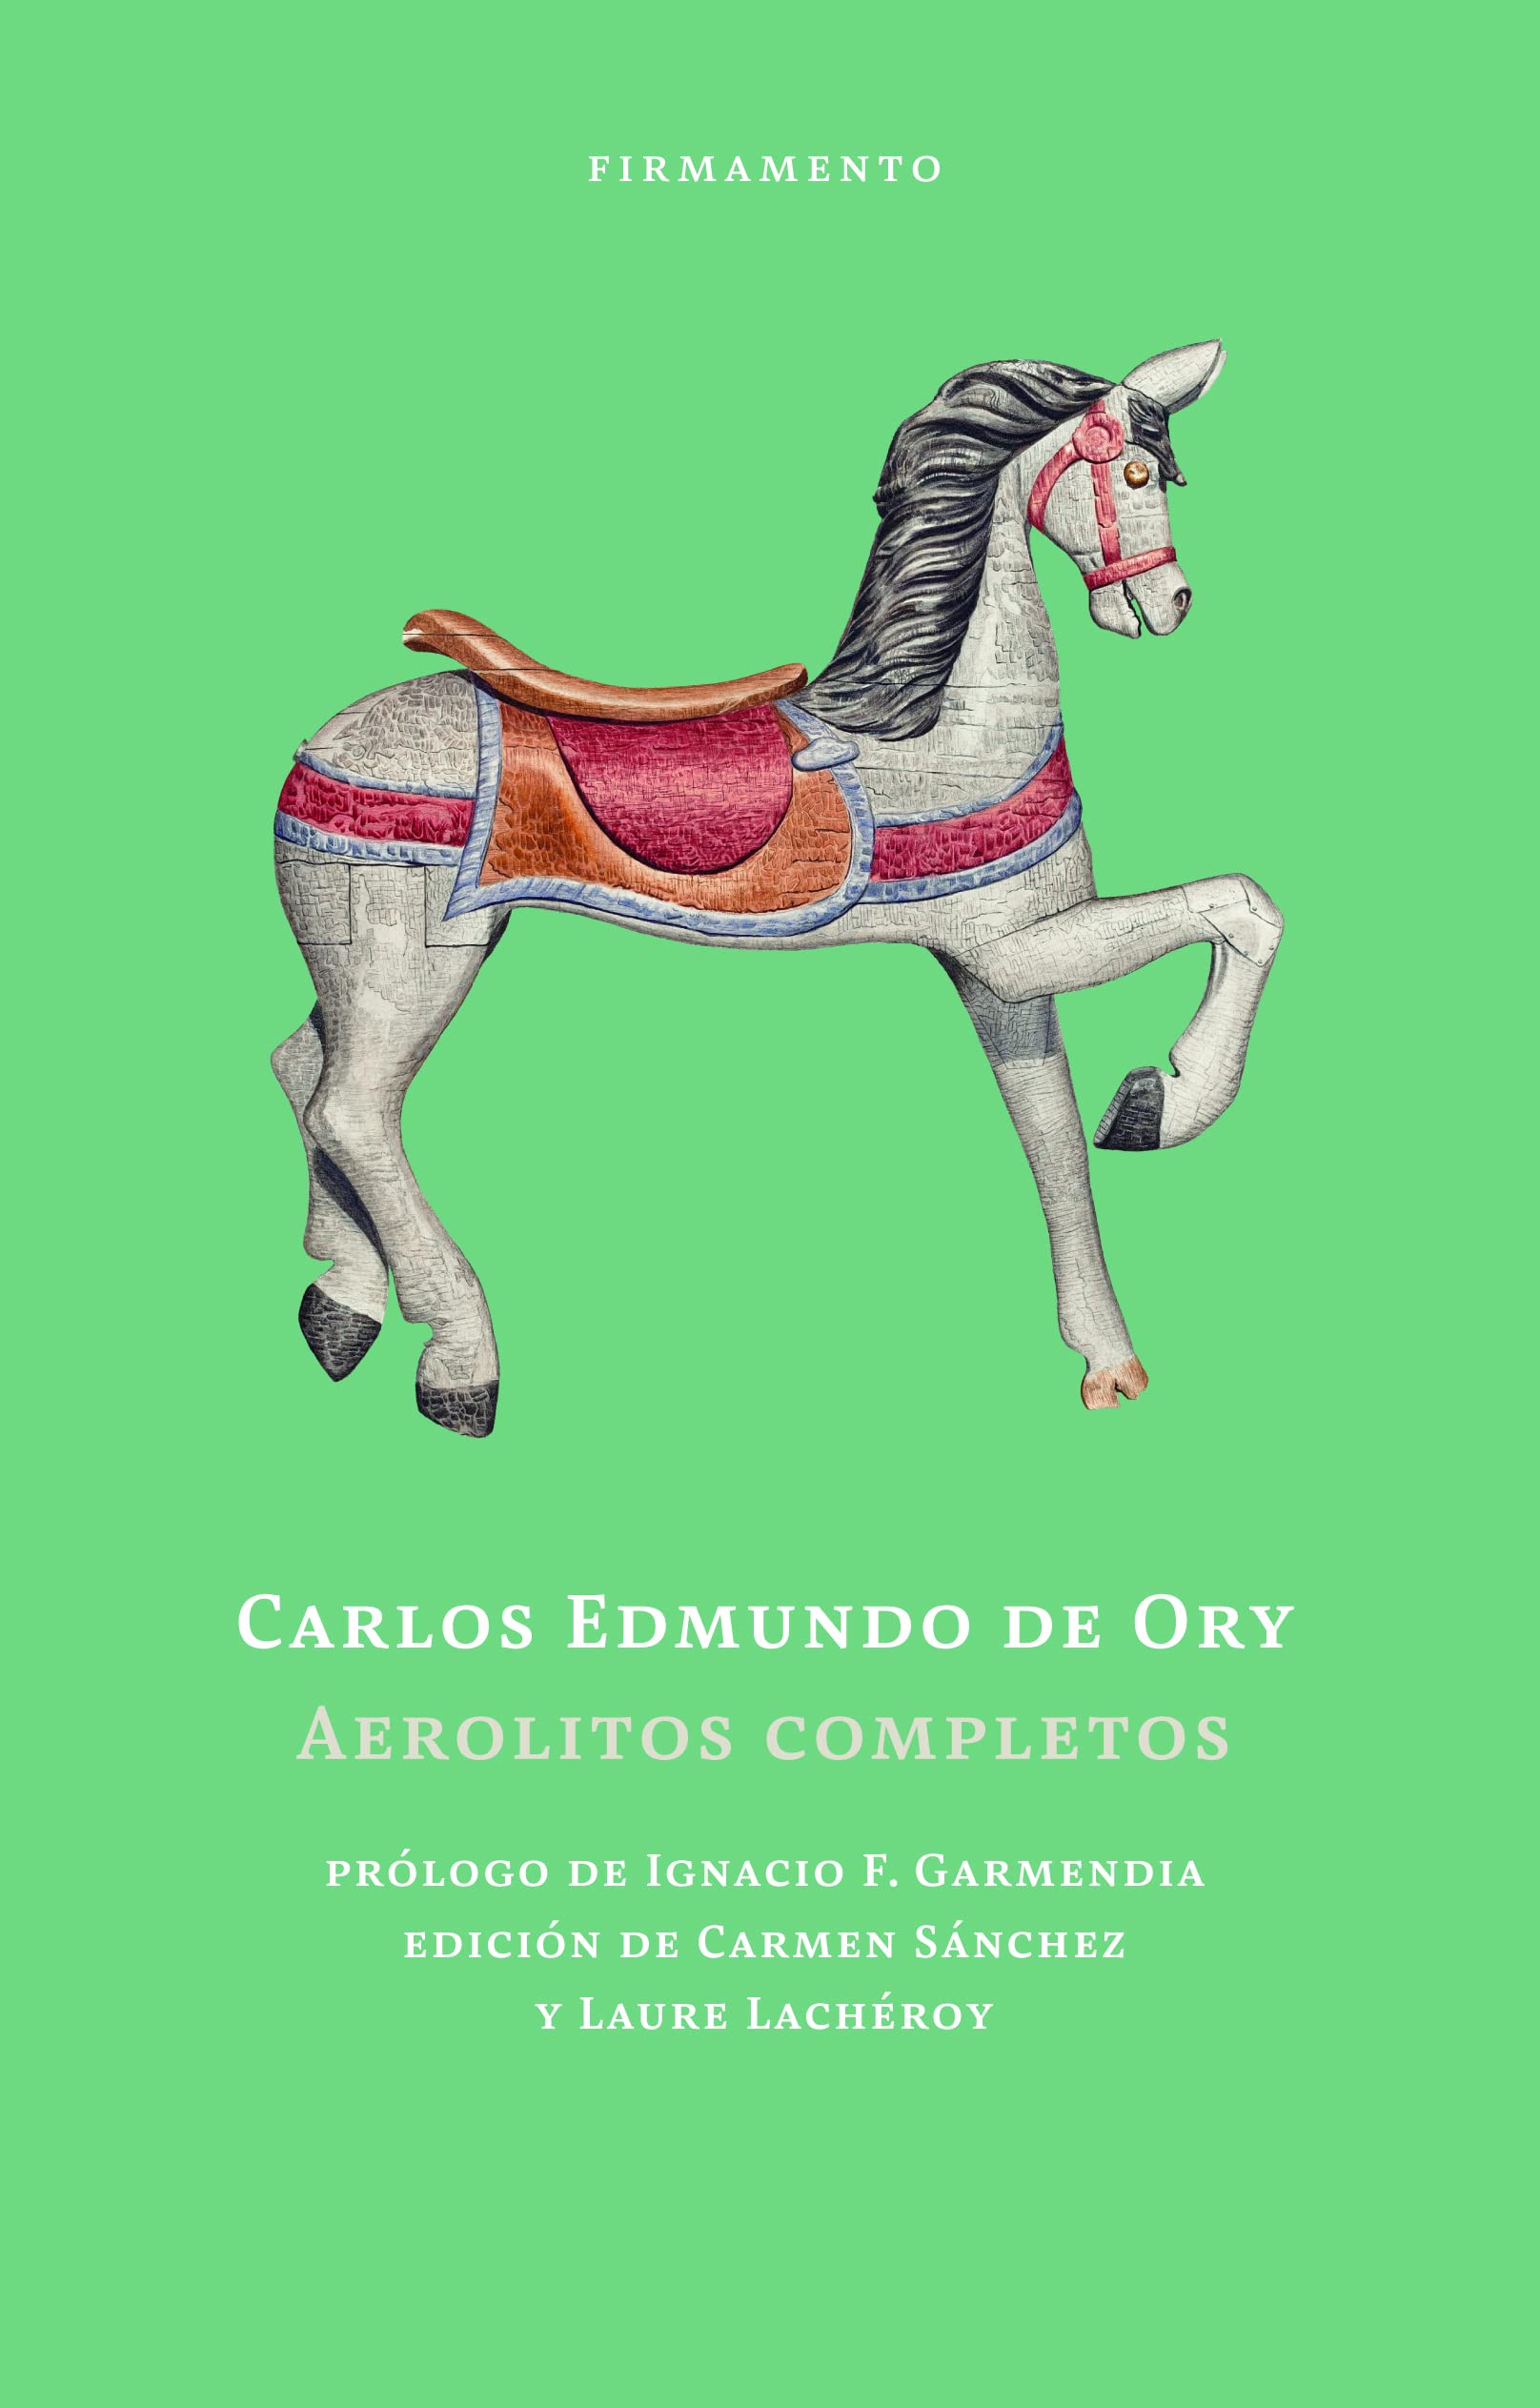 30 aerolitos de Carlos Edmundo de Ory